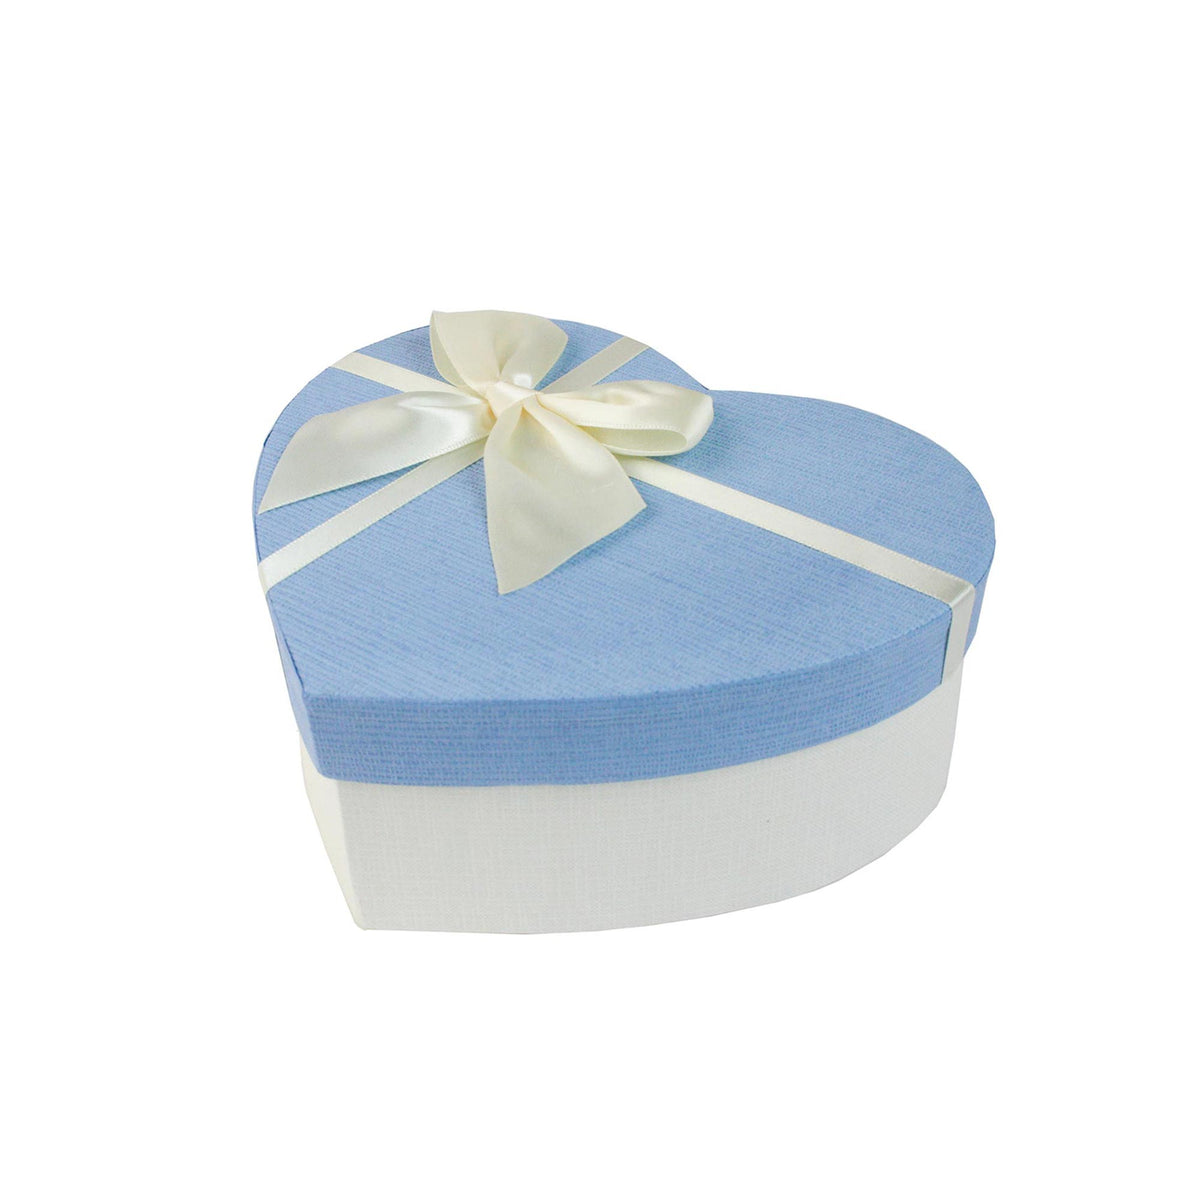 Single White/Blue Gift Box With White Satin Ribbon (Sizes Available)